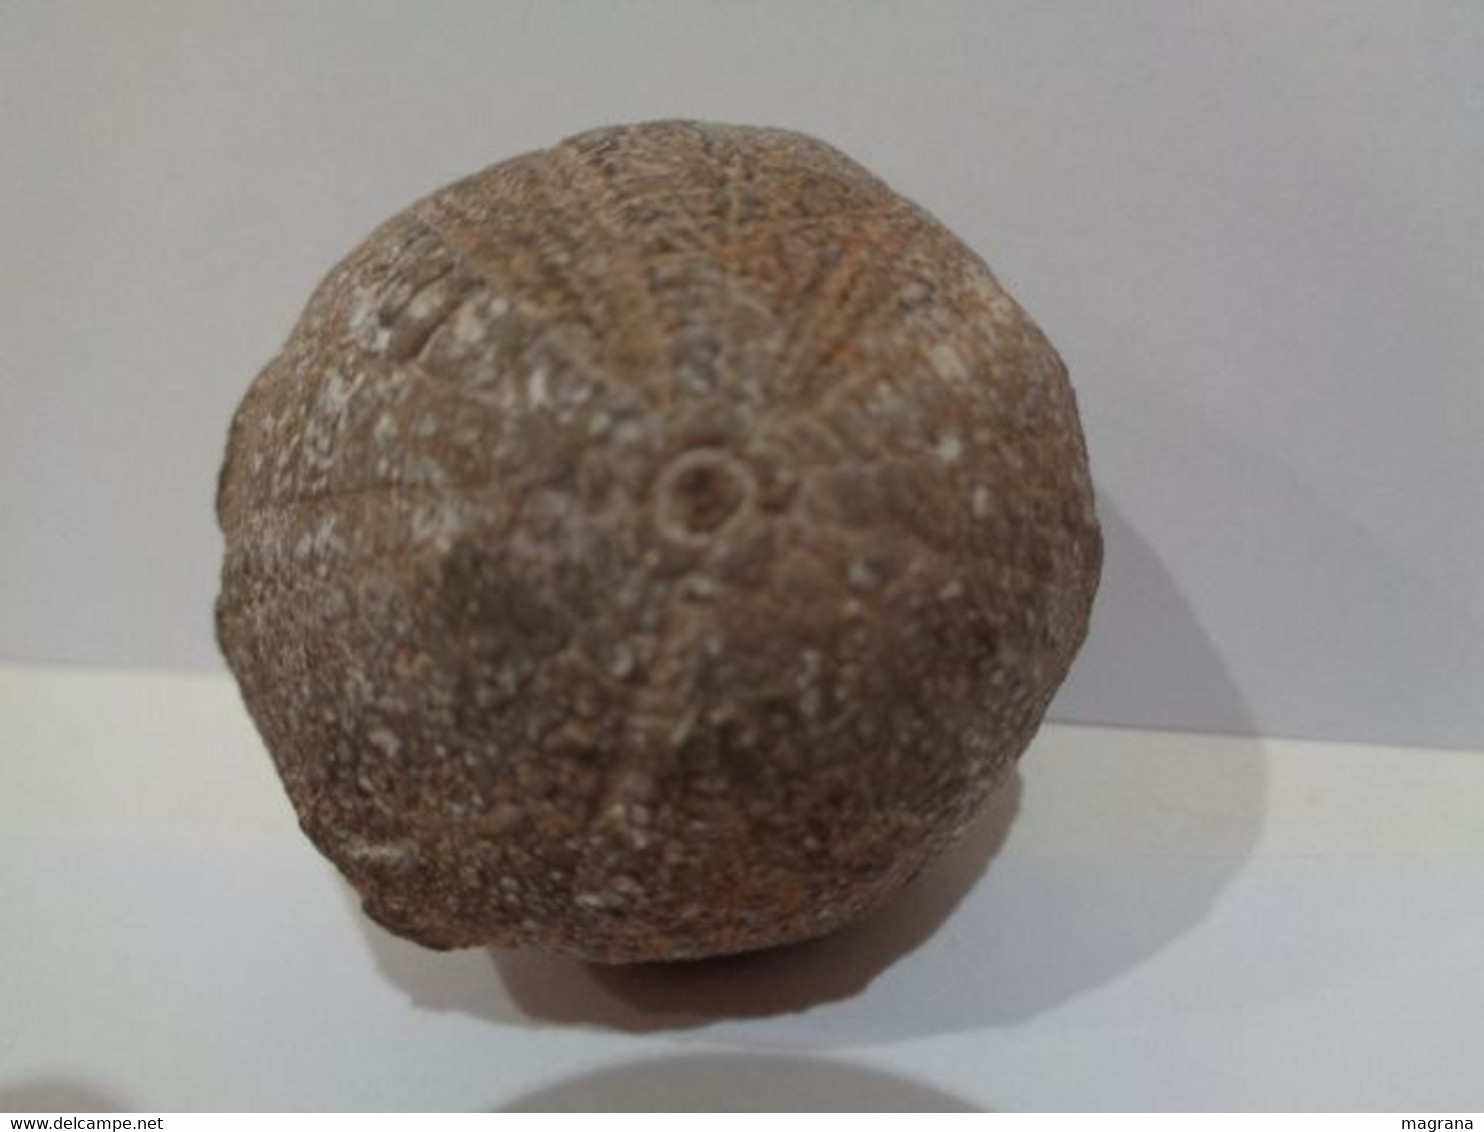 Fossil sea urchin. Psephechinus michelini. Age: Jurassic, Bathonian. 175 million years. Locality: Gourama, Morocco.